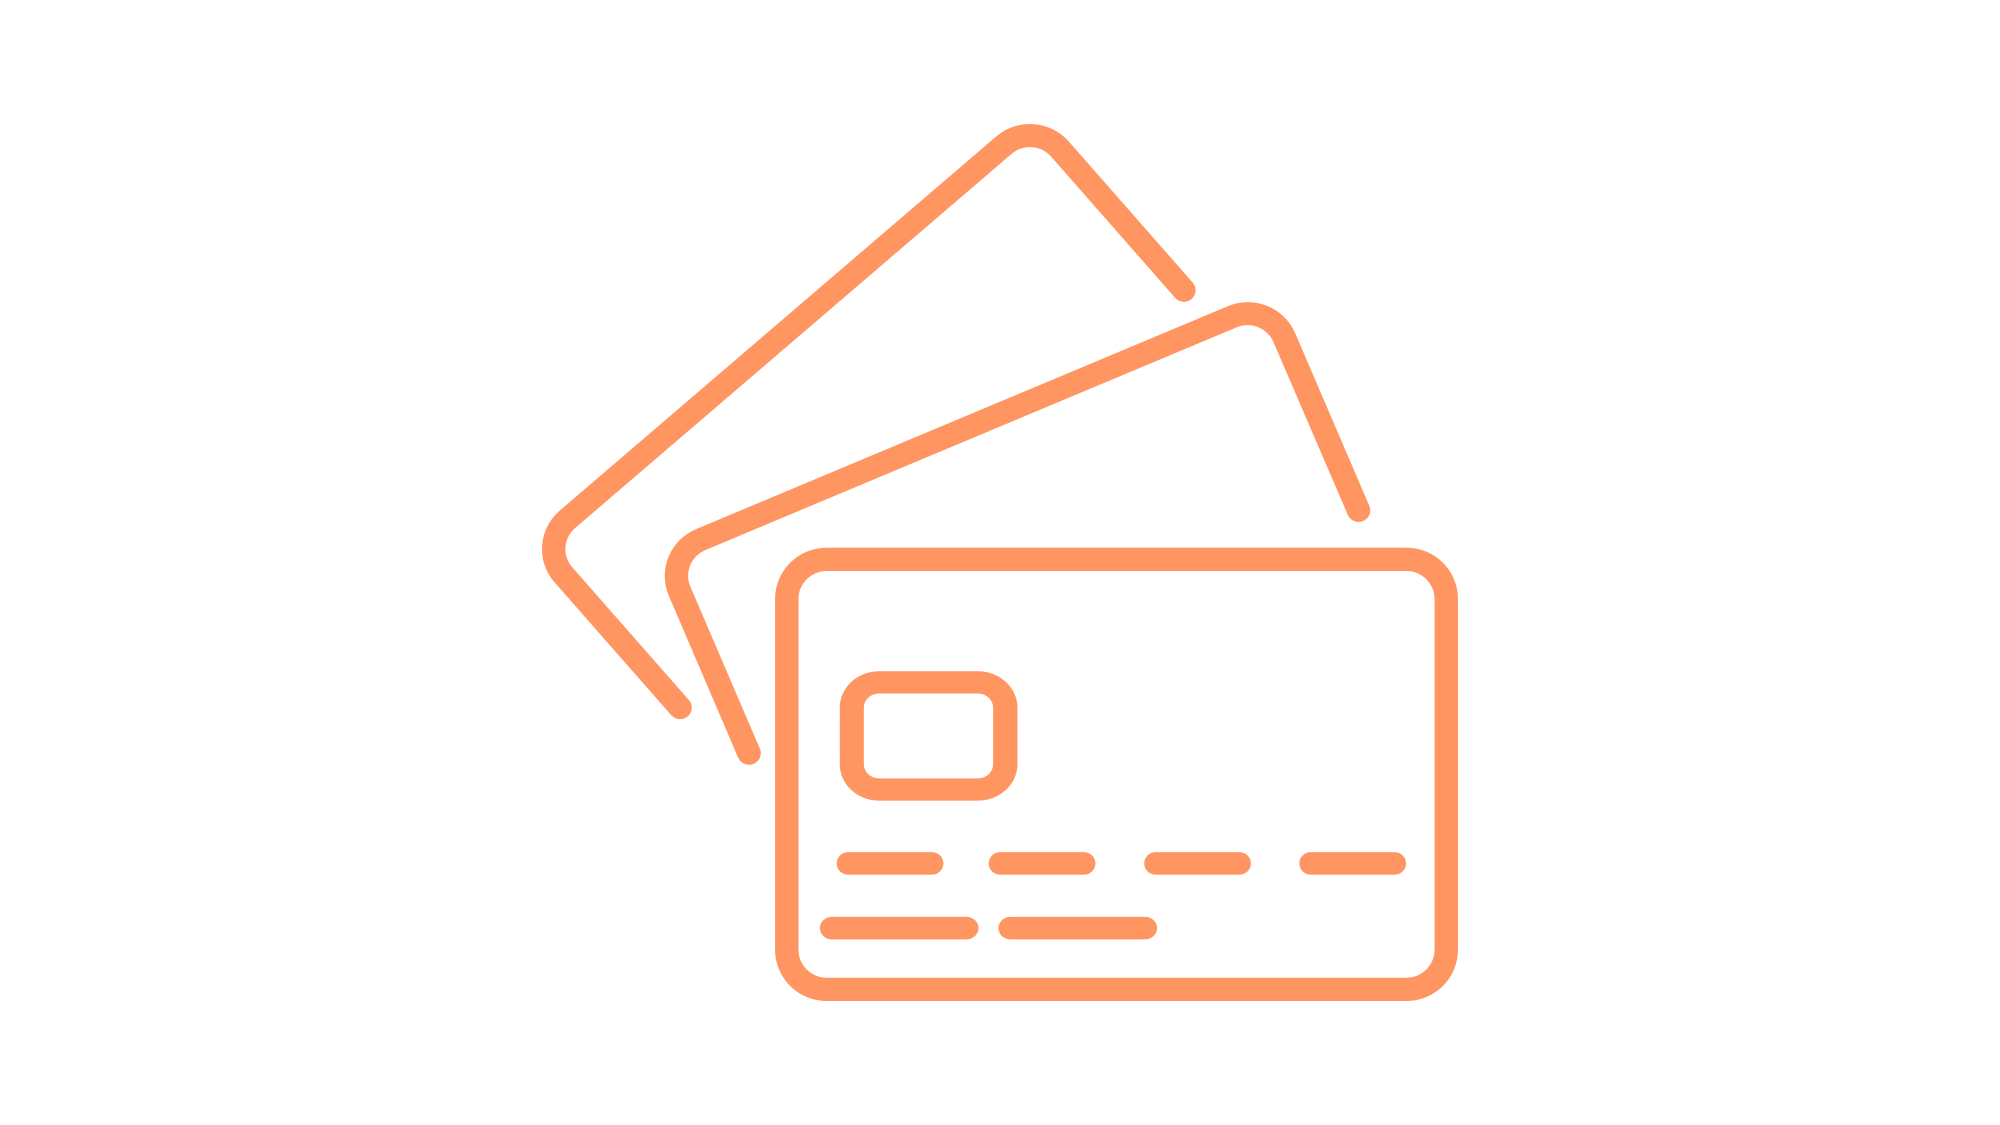 3 Credit Card Icon